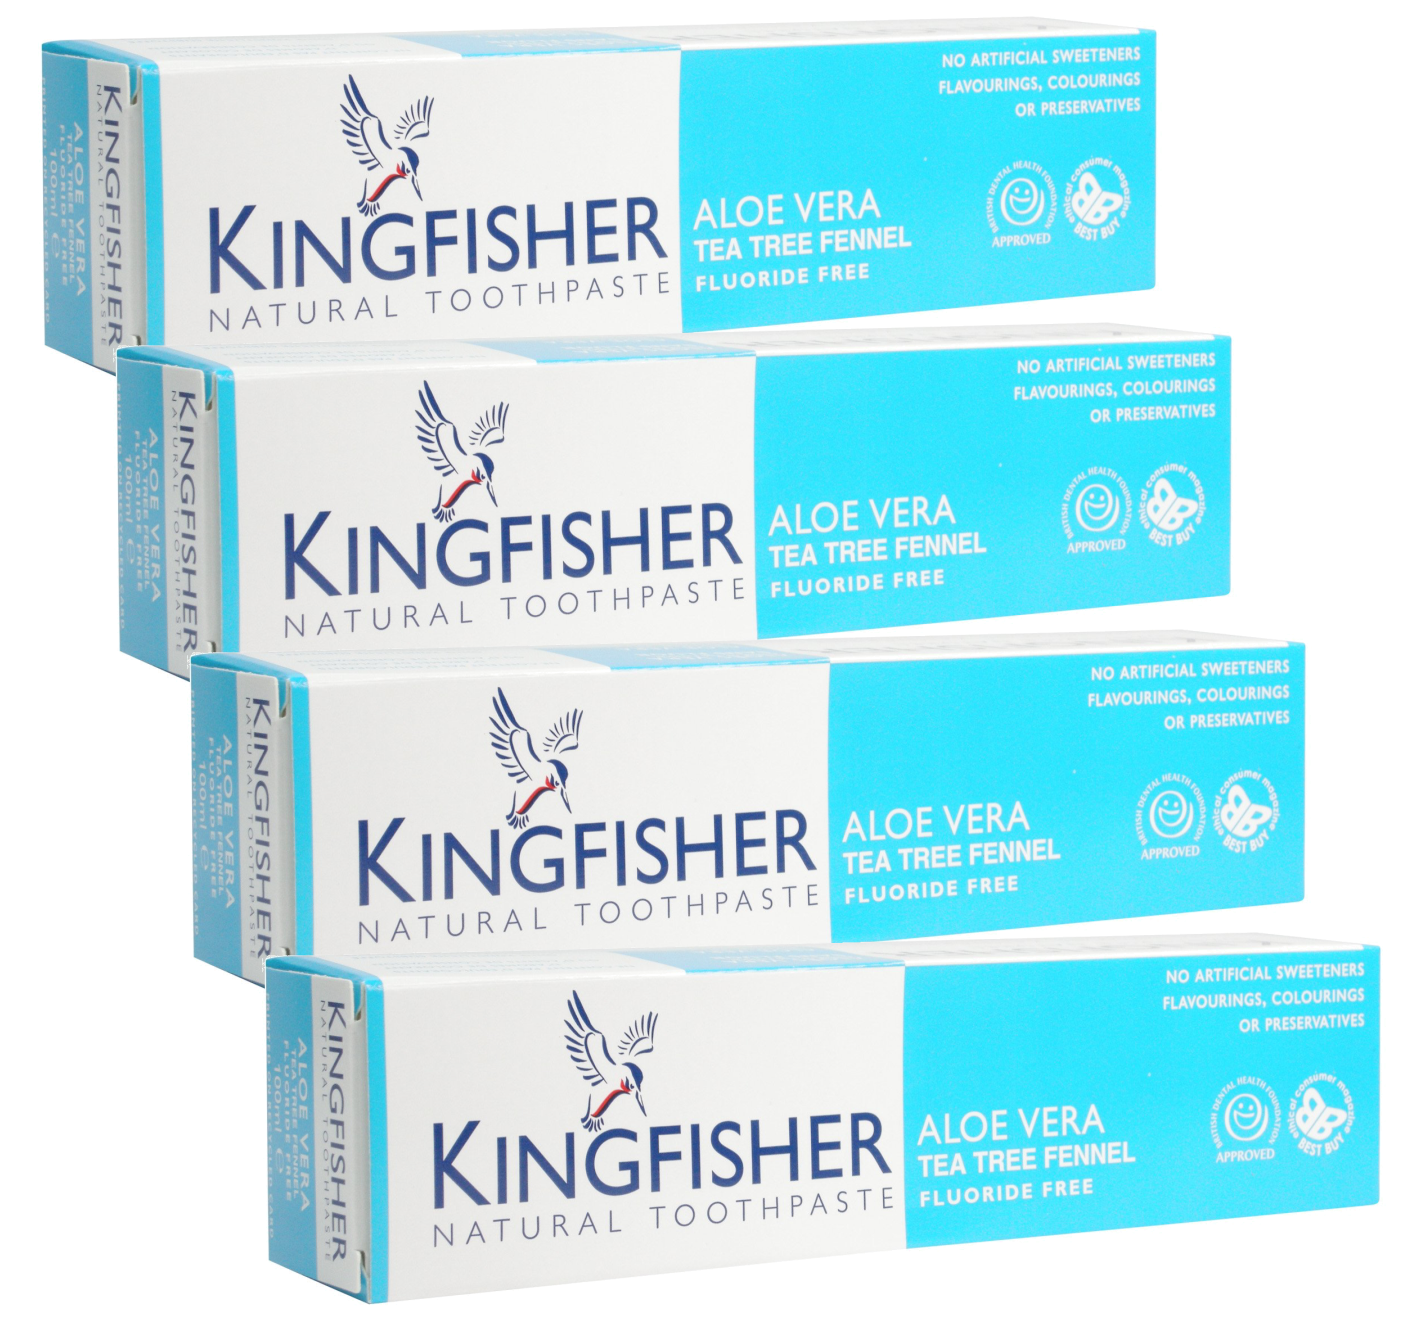 Kingfisher Toothpaste - Aloe Vera Tea Tree Fennel Fluoride Free Toothpaste (100ml) - Pack of 4